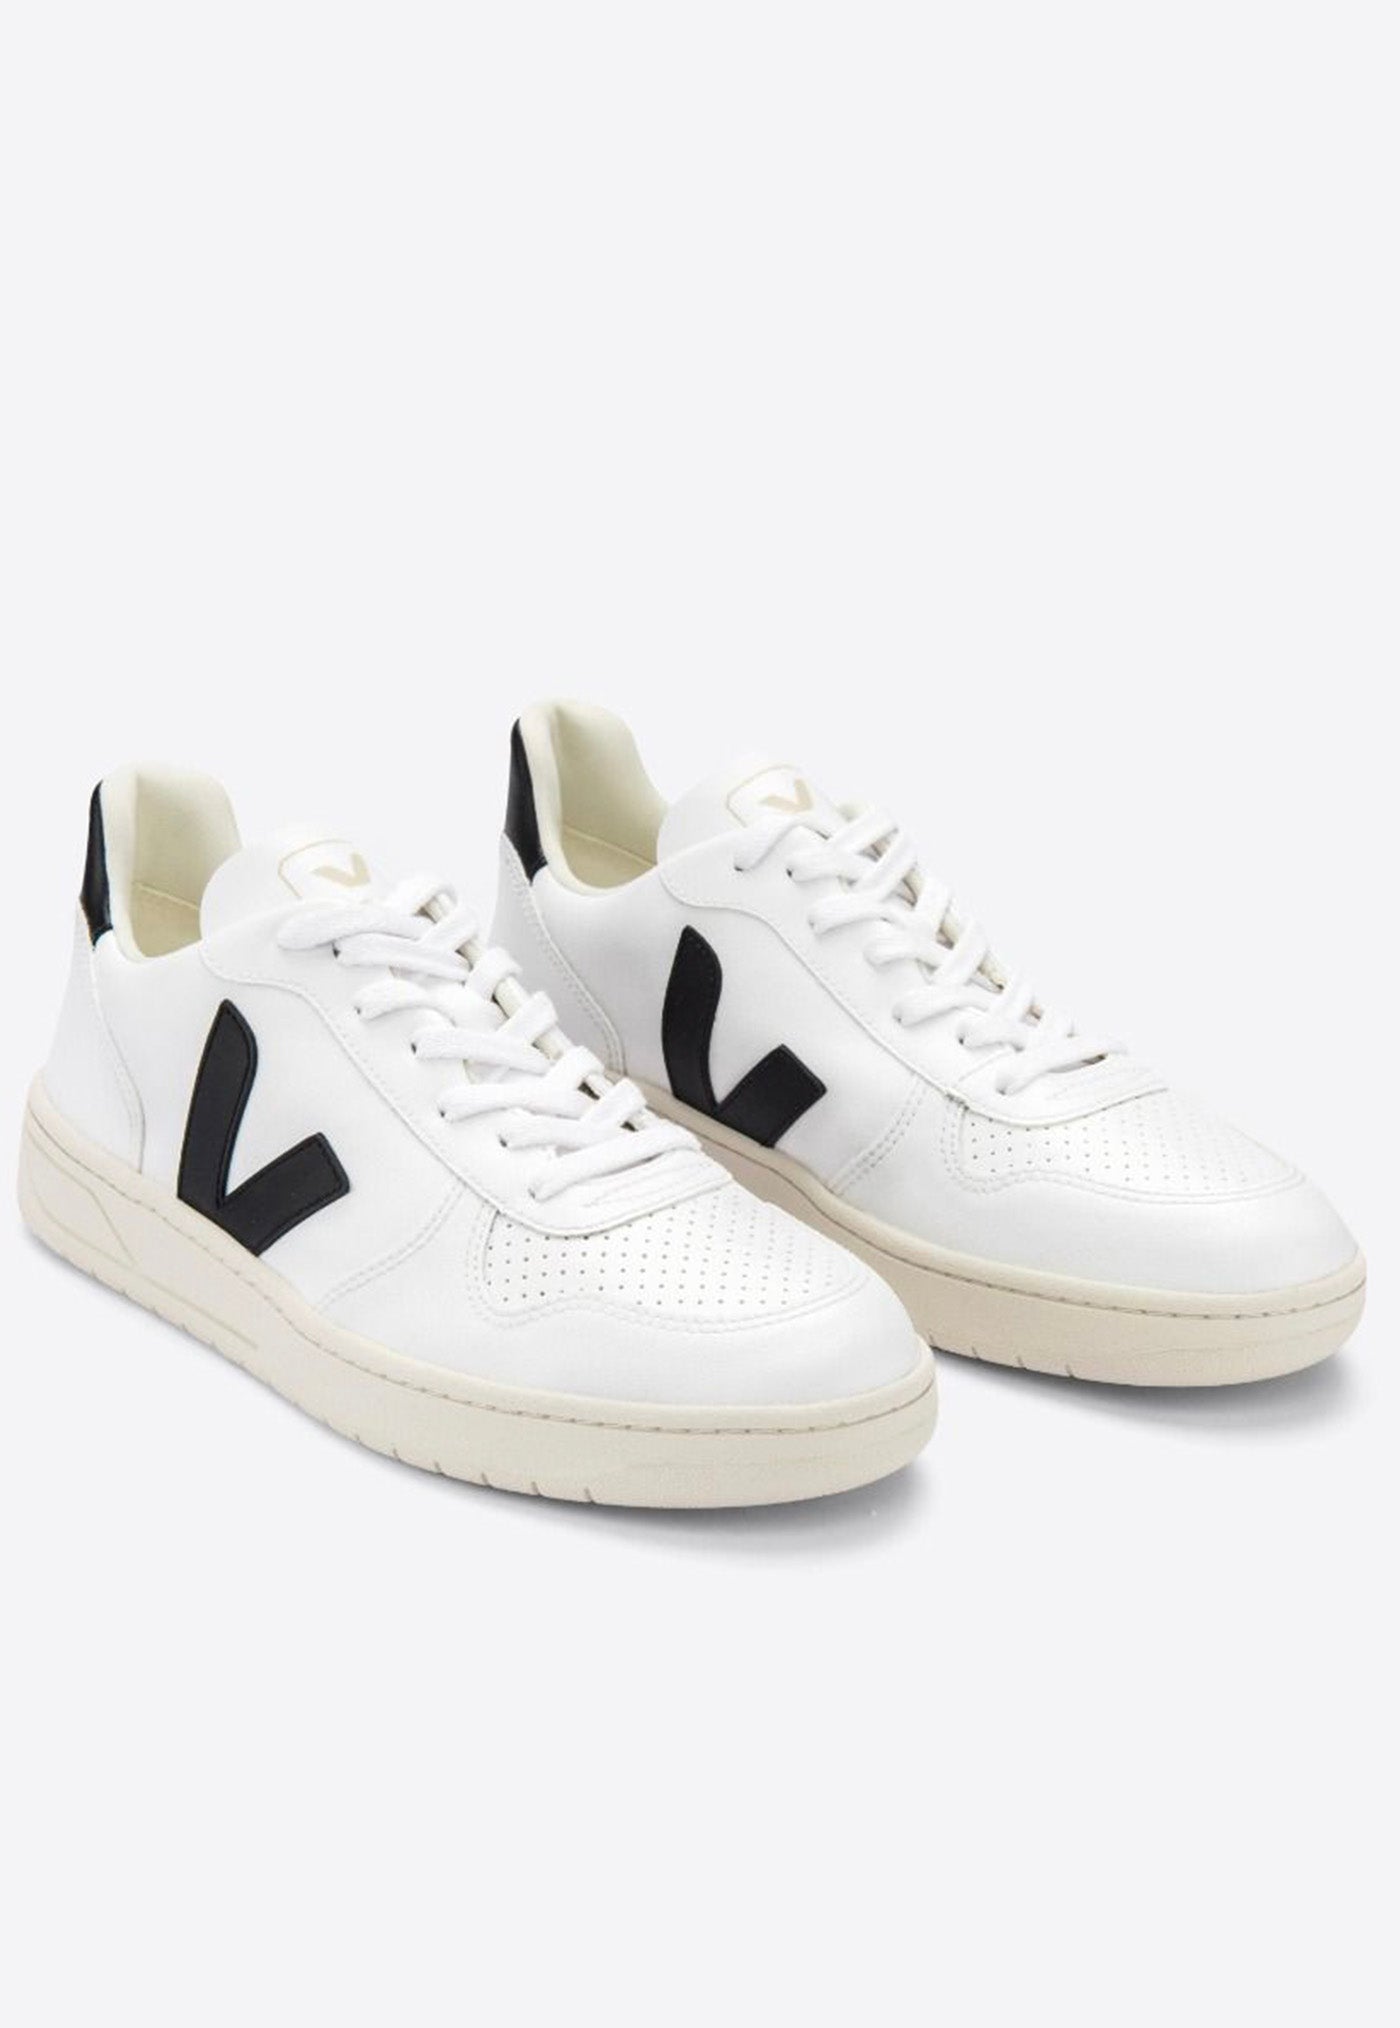 V-10 CWL Sneakers - White/Black sold by Angel Divine